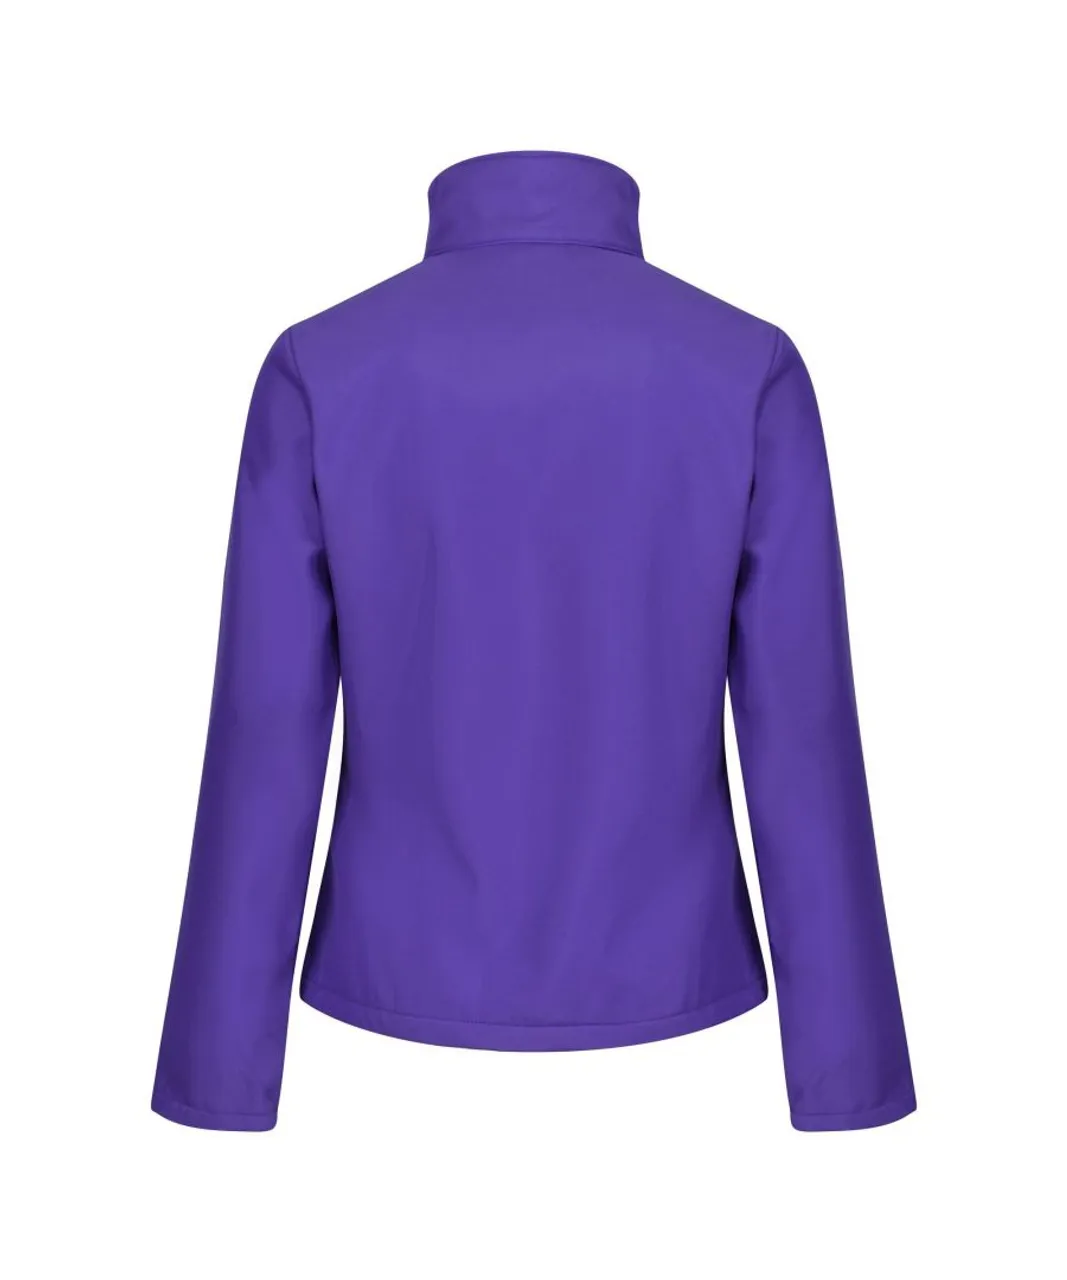 Regatta Standout Womens/Ladies Ablaze Printable Soft Shell Jacket (Purple/Black) - Multicolour